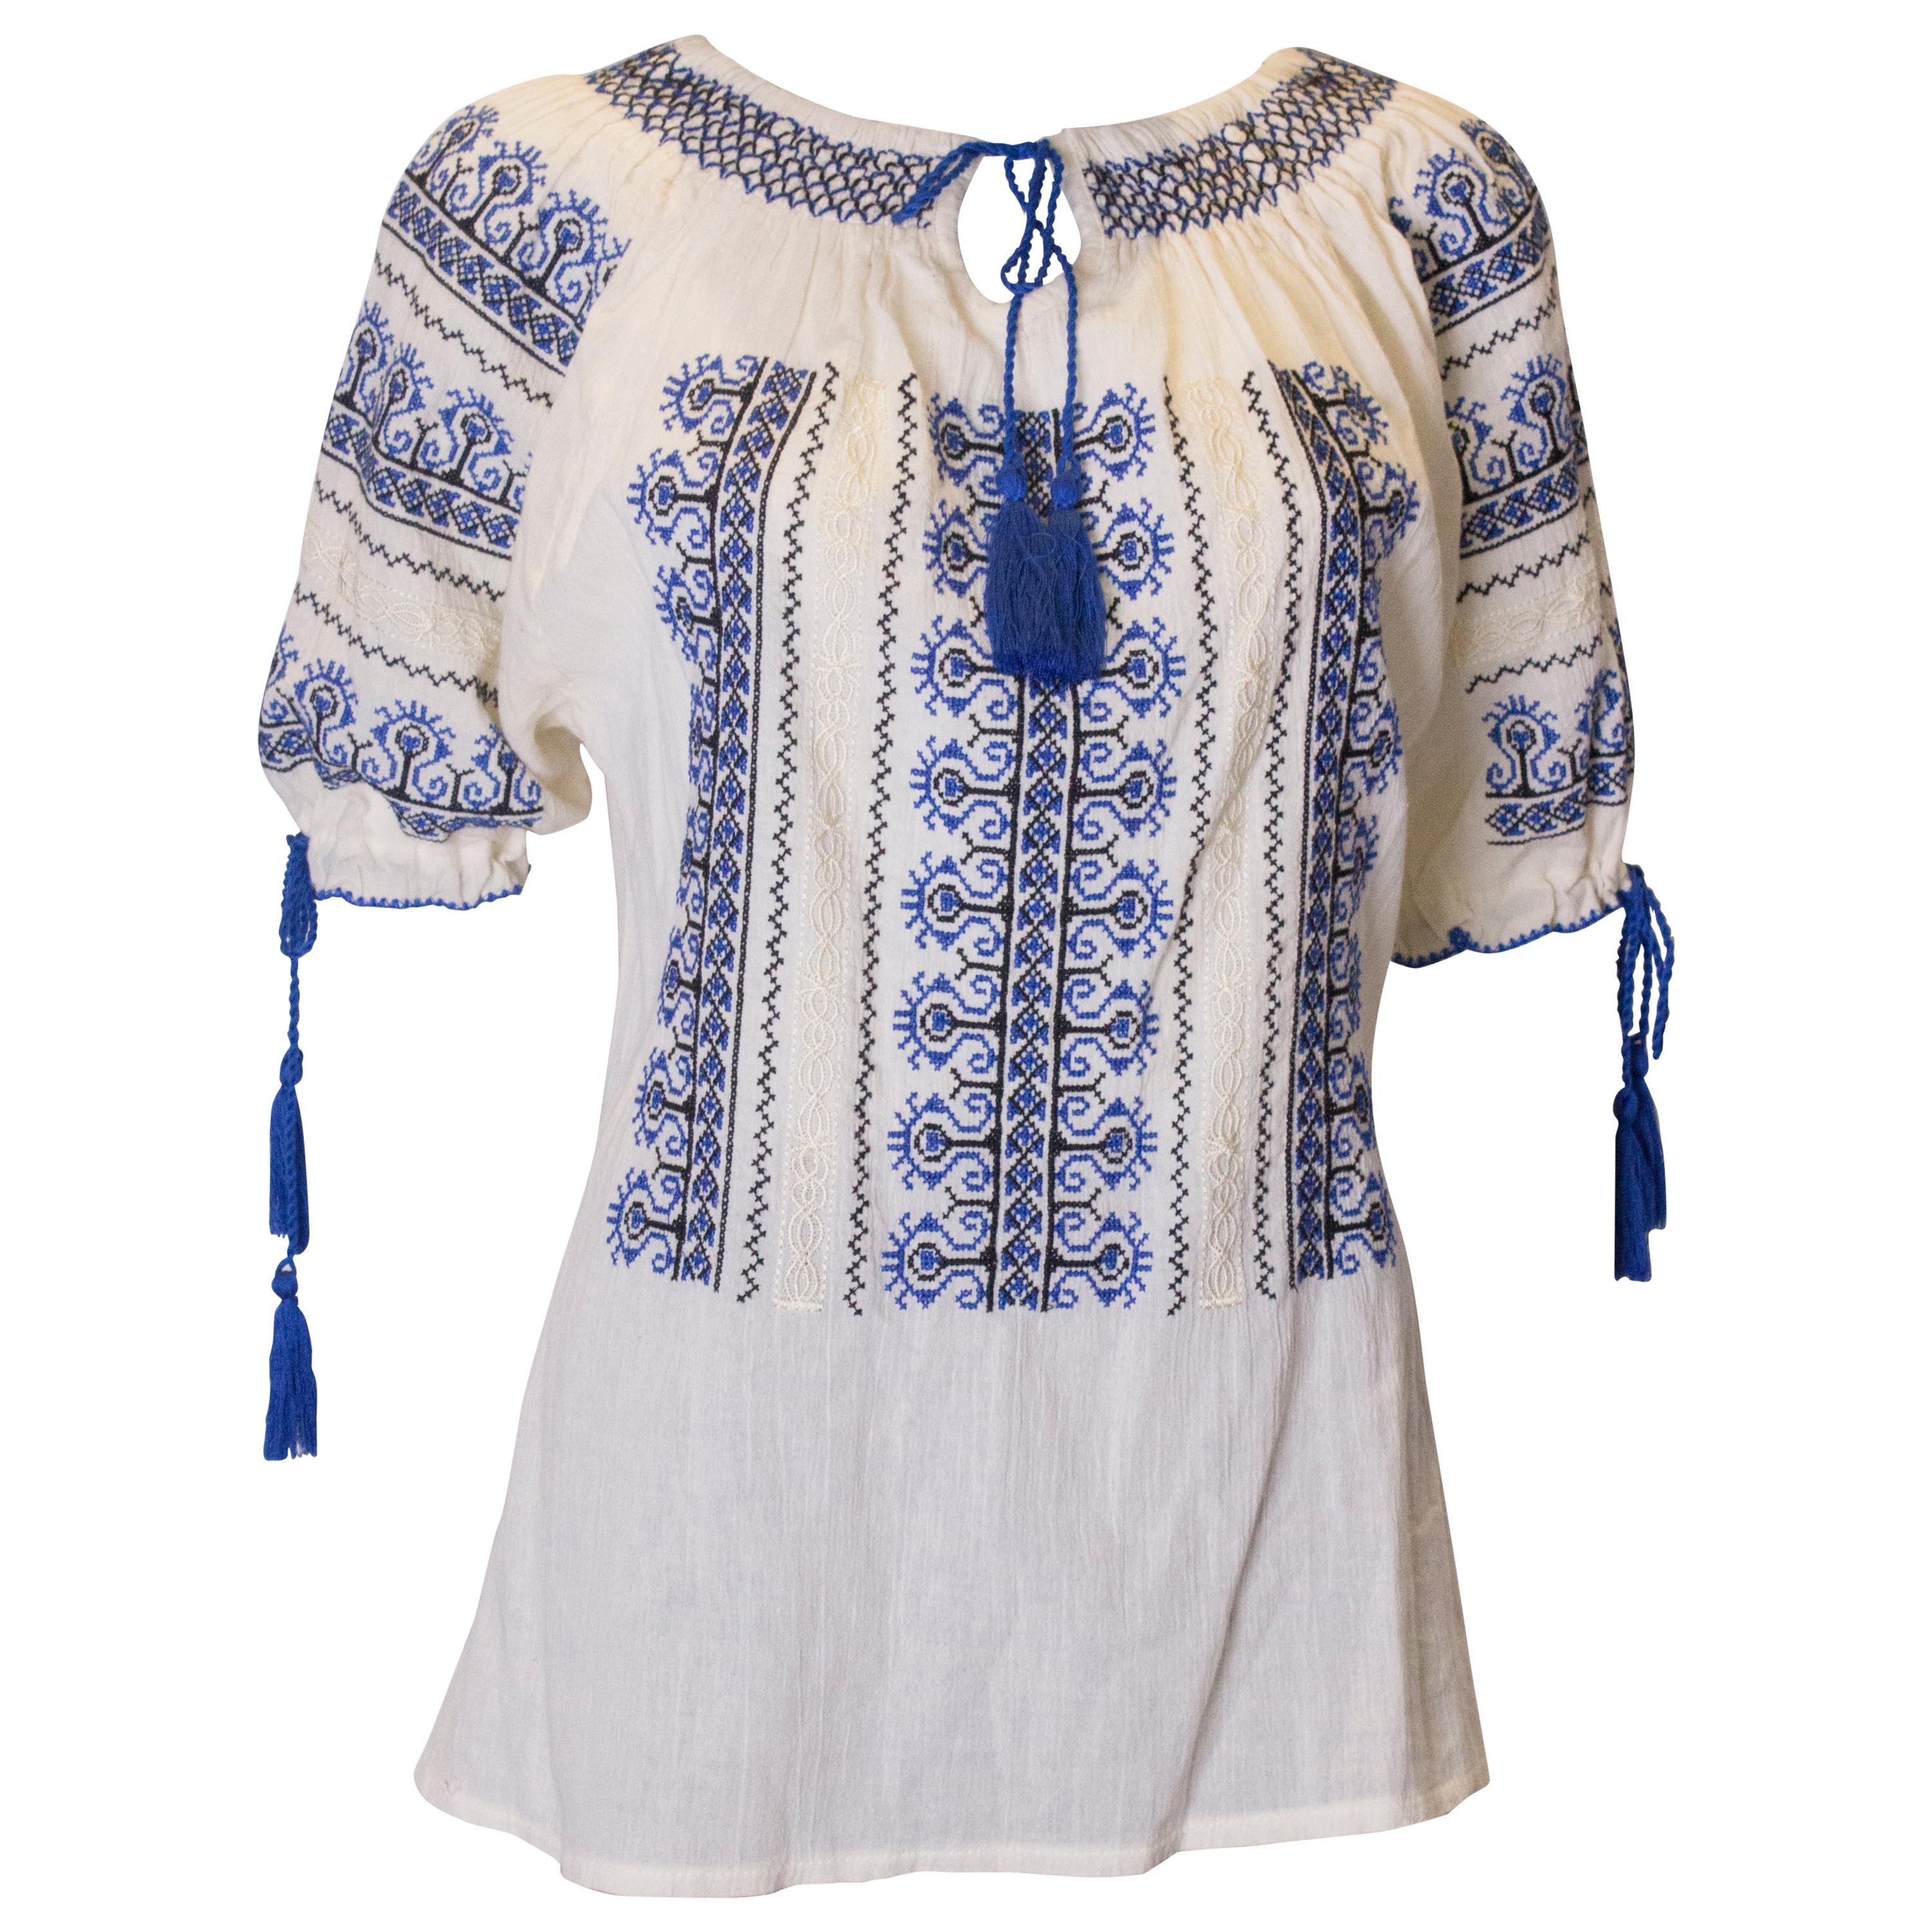 zijde en vintage kant boho romance blouse Kleding Dameskleding Tops & T-shirts Blouses medium / large mistig blauw 